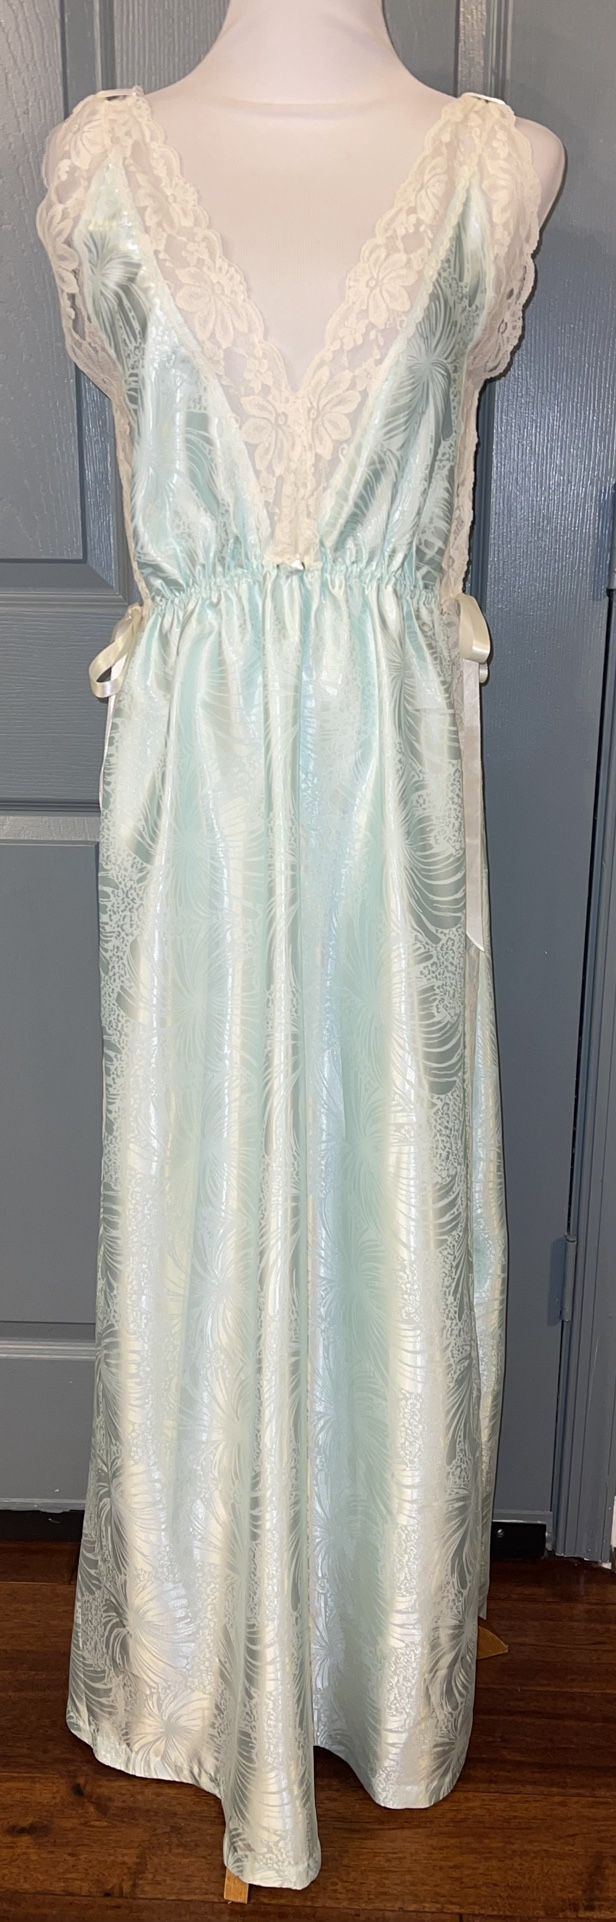 LILY OF FRANCE Vintage Blue Floral Satın Lace Trim Long Nightgown